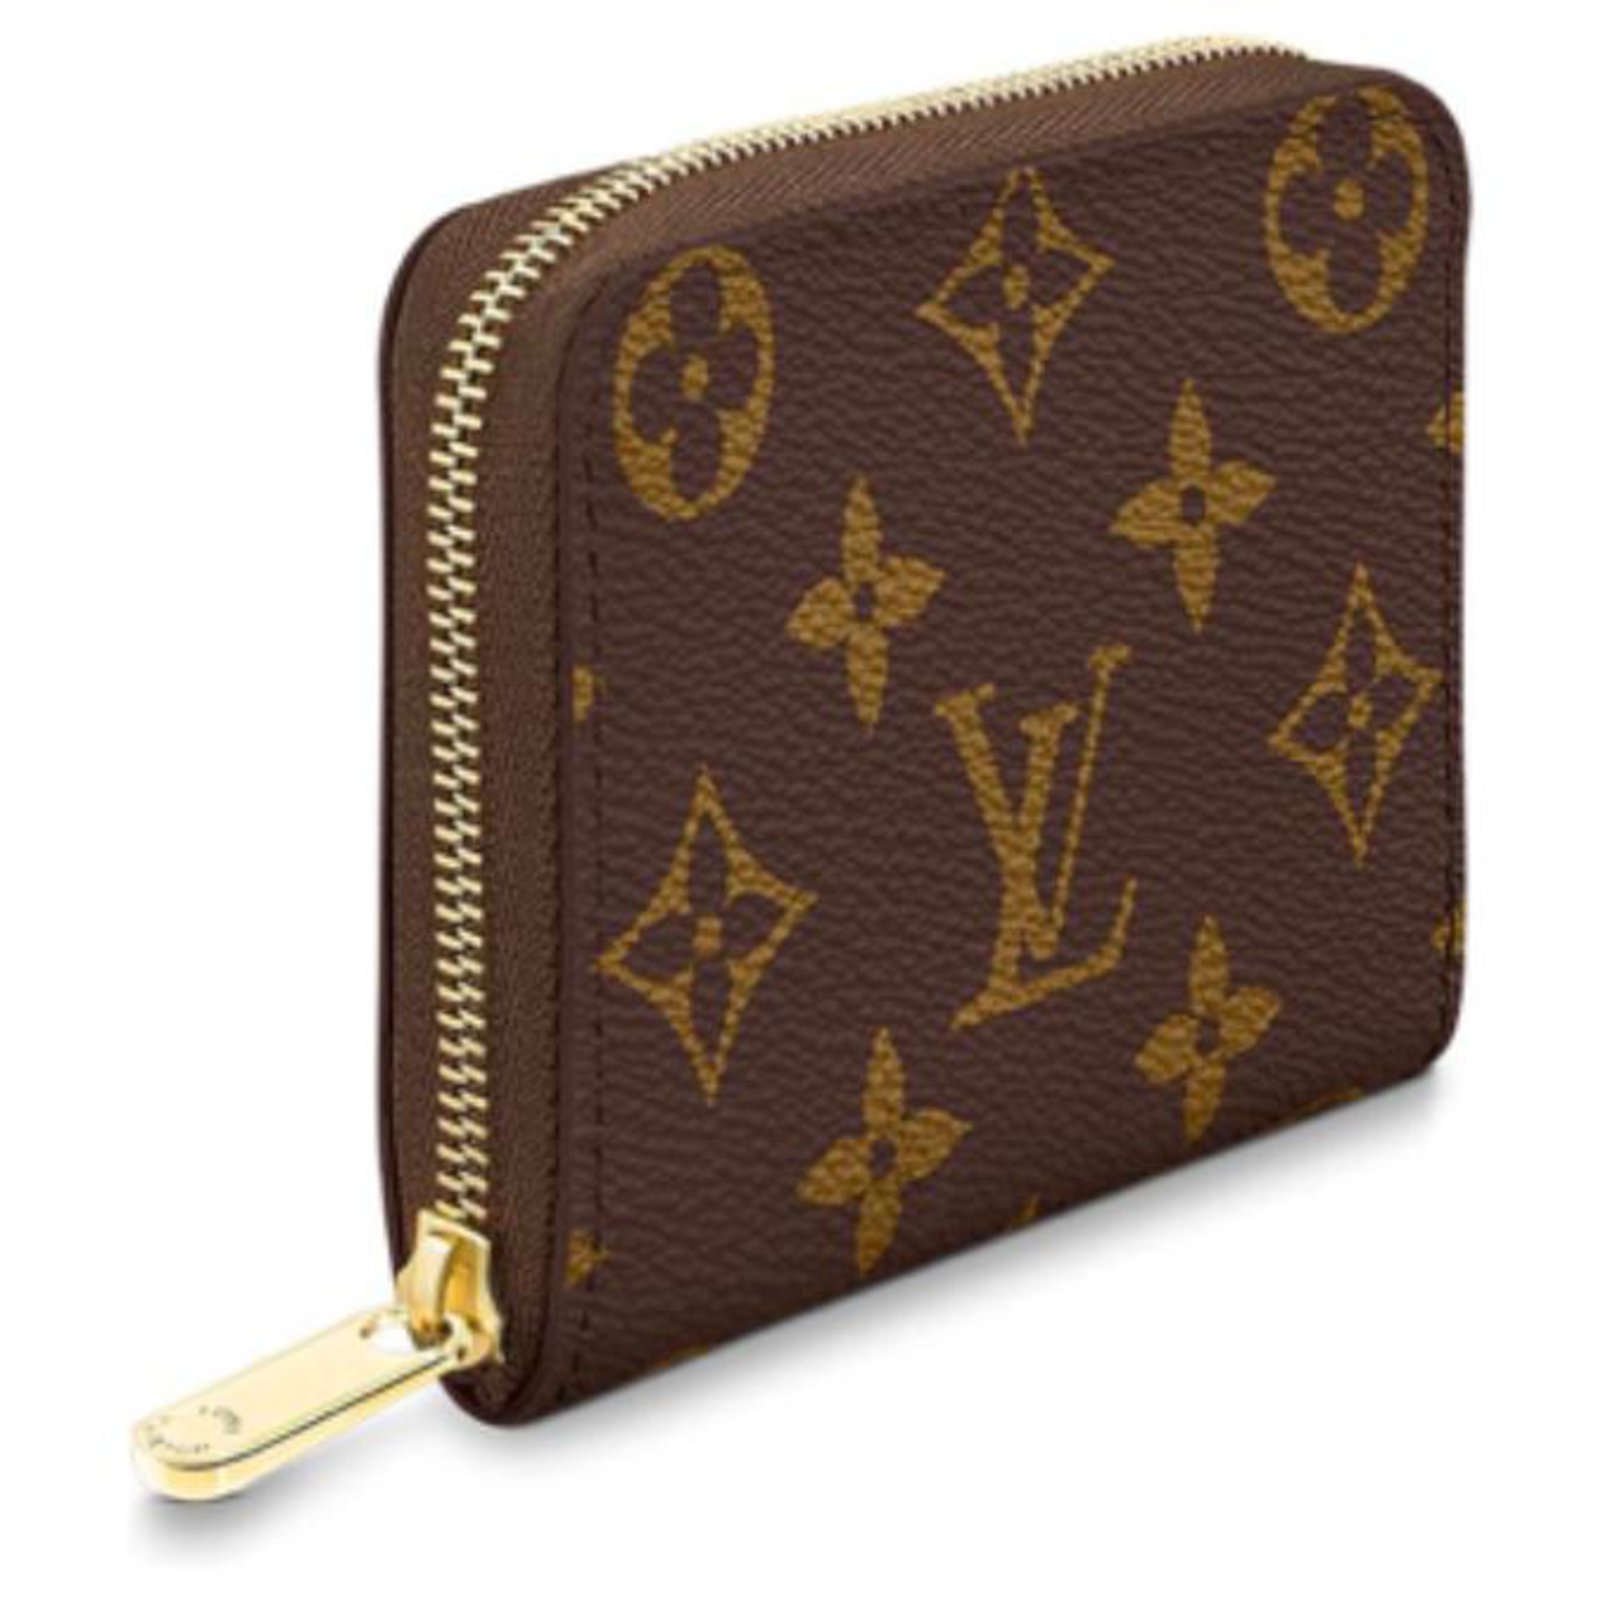 Louis Vuitton - Zippy Coin Purse - Monogram - Brown - Women - Luxury